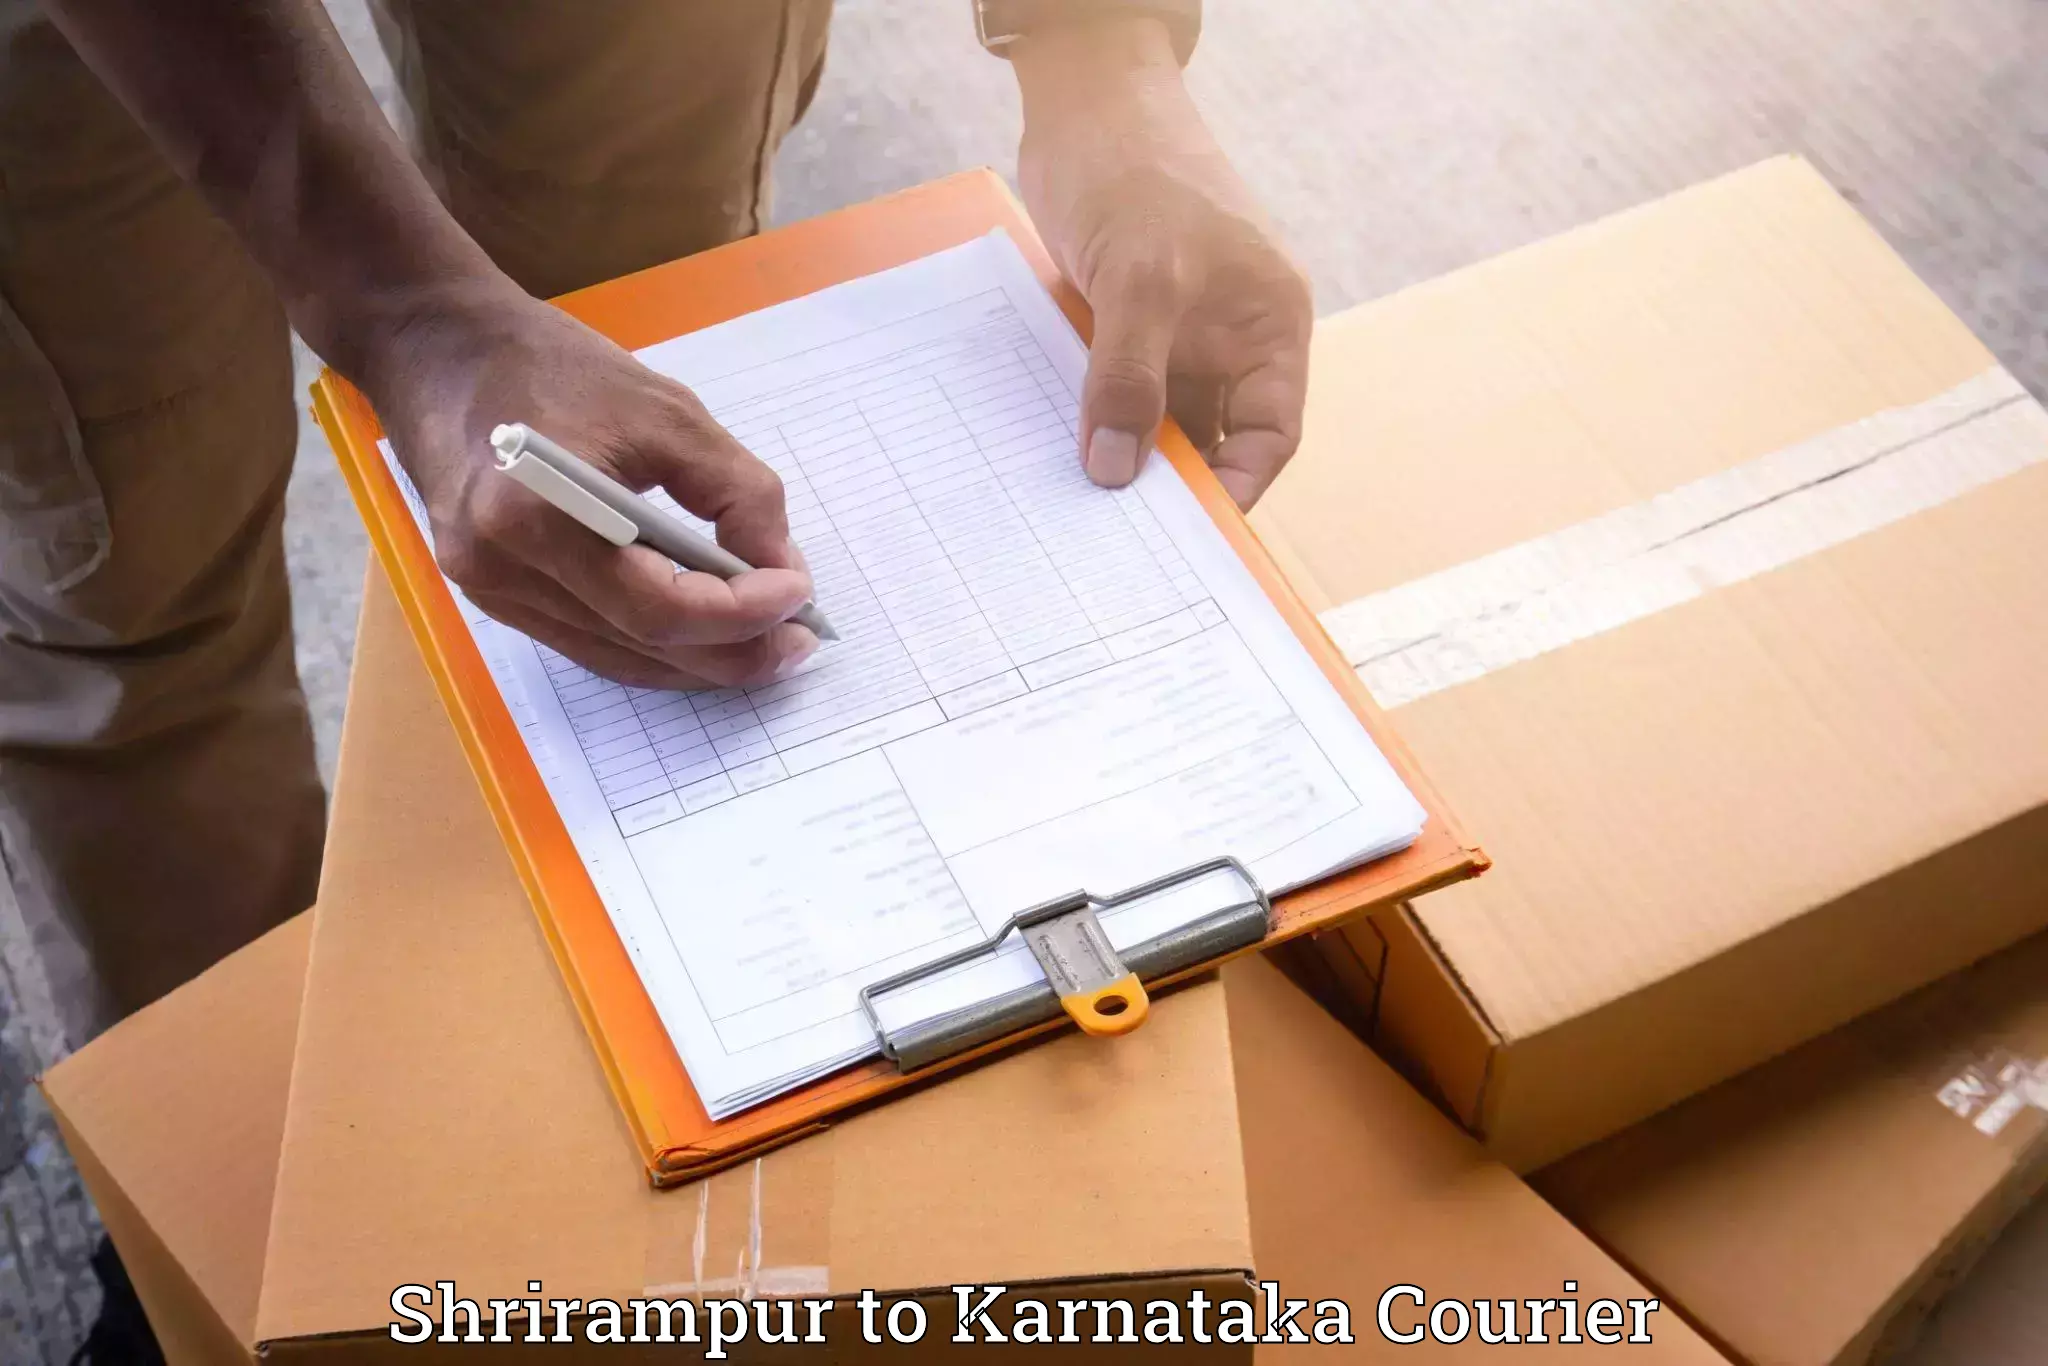 Furniture delivery service Shrirampur to Belagavi